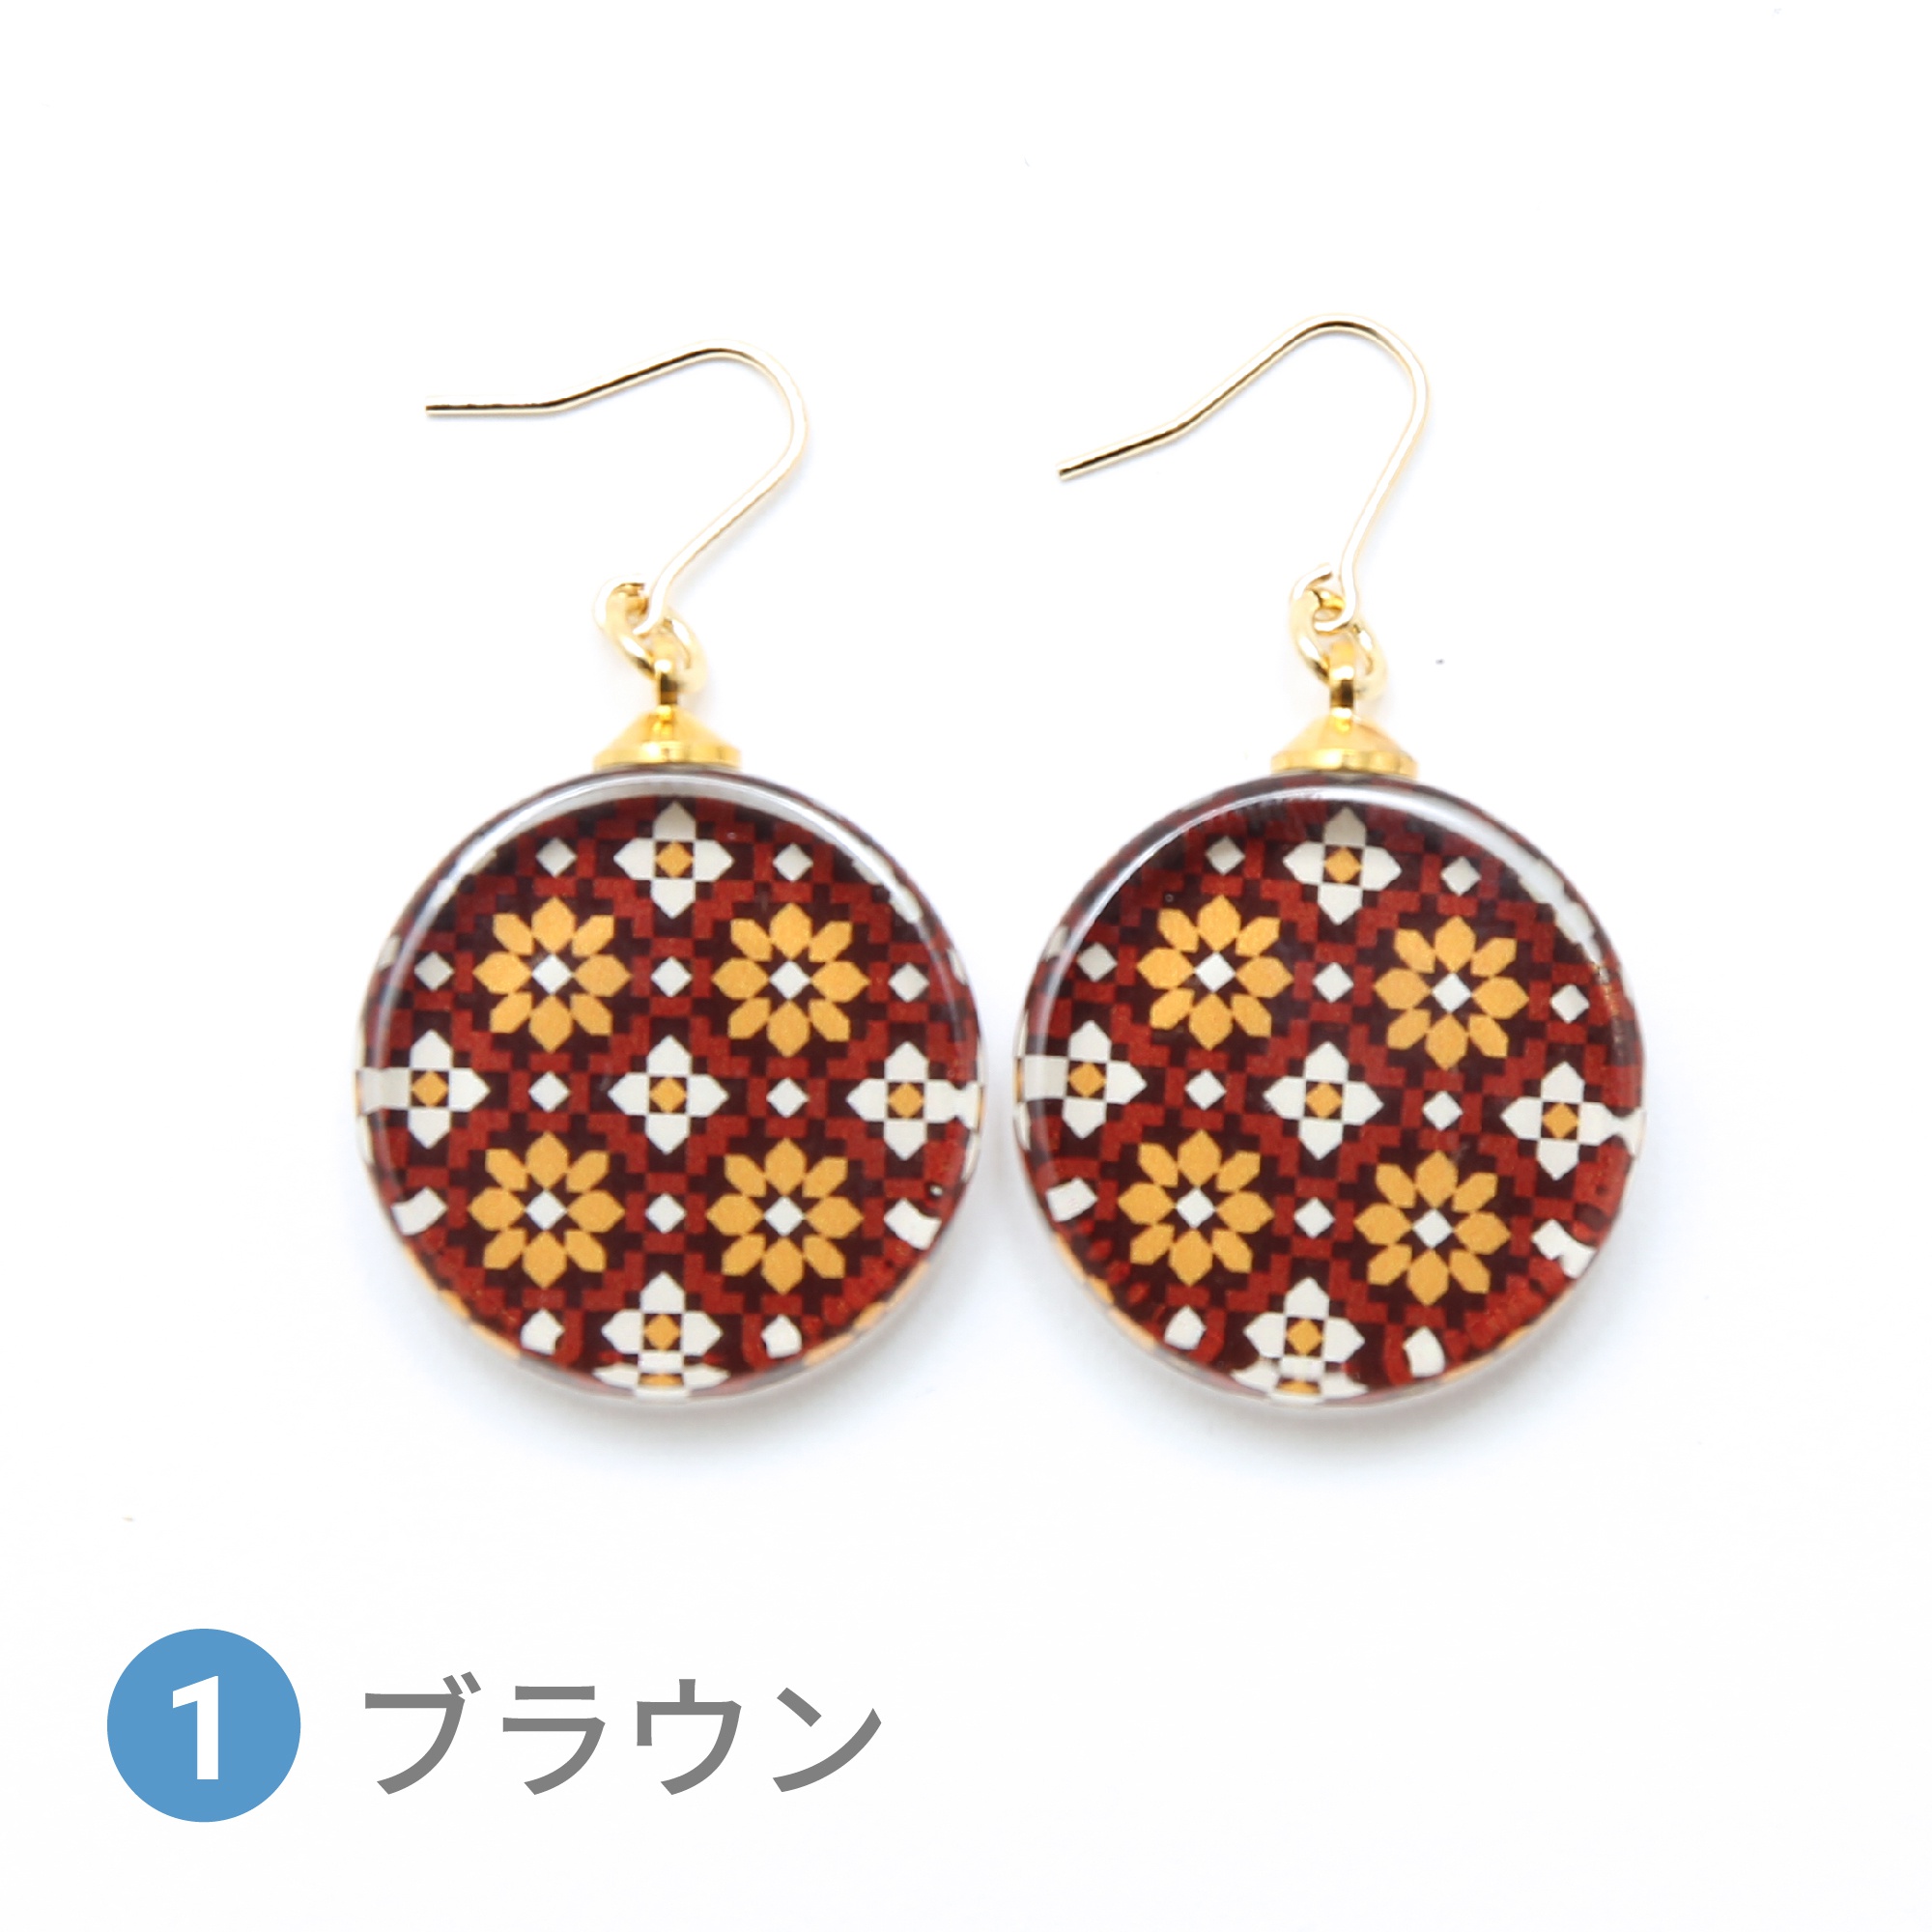 Glass accessories Pierced Earring ARABESQUE brown round shape